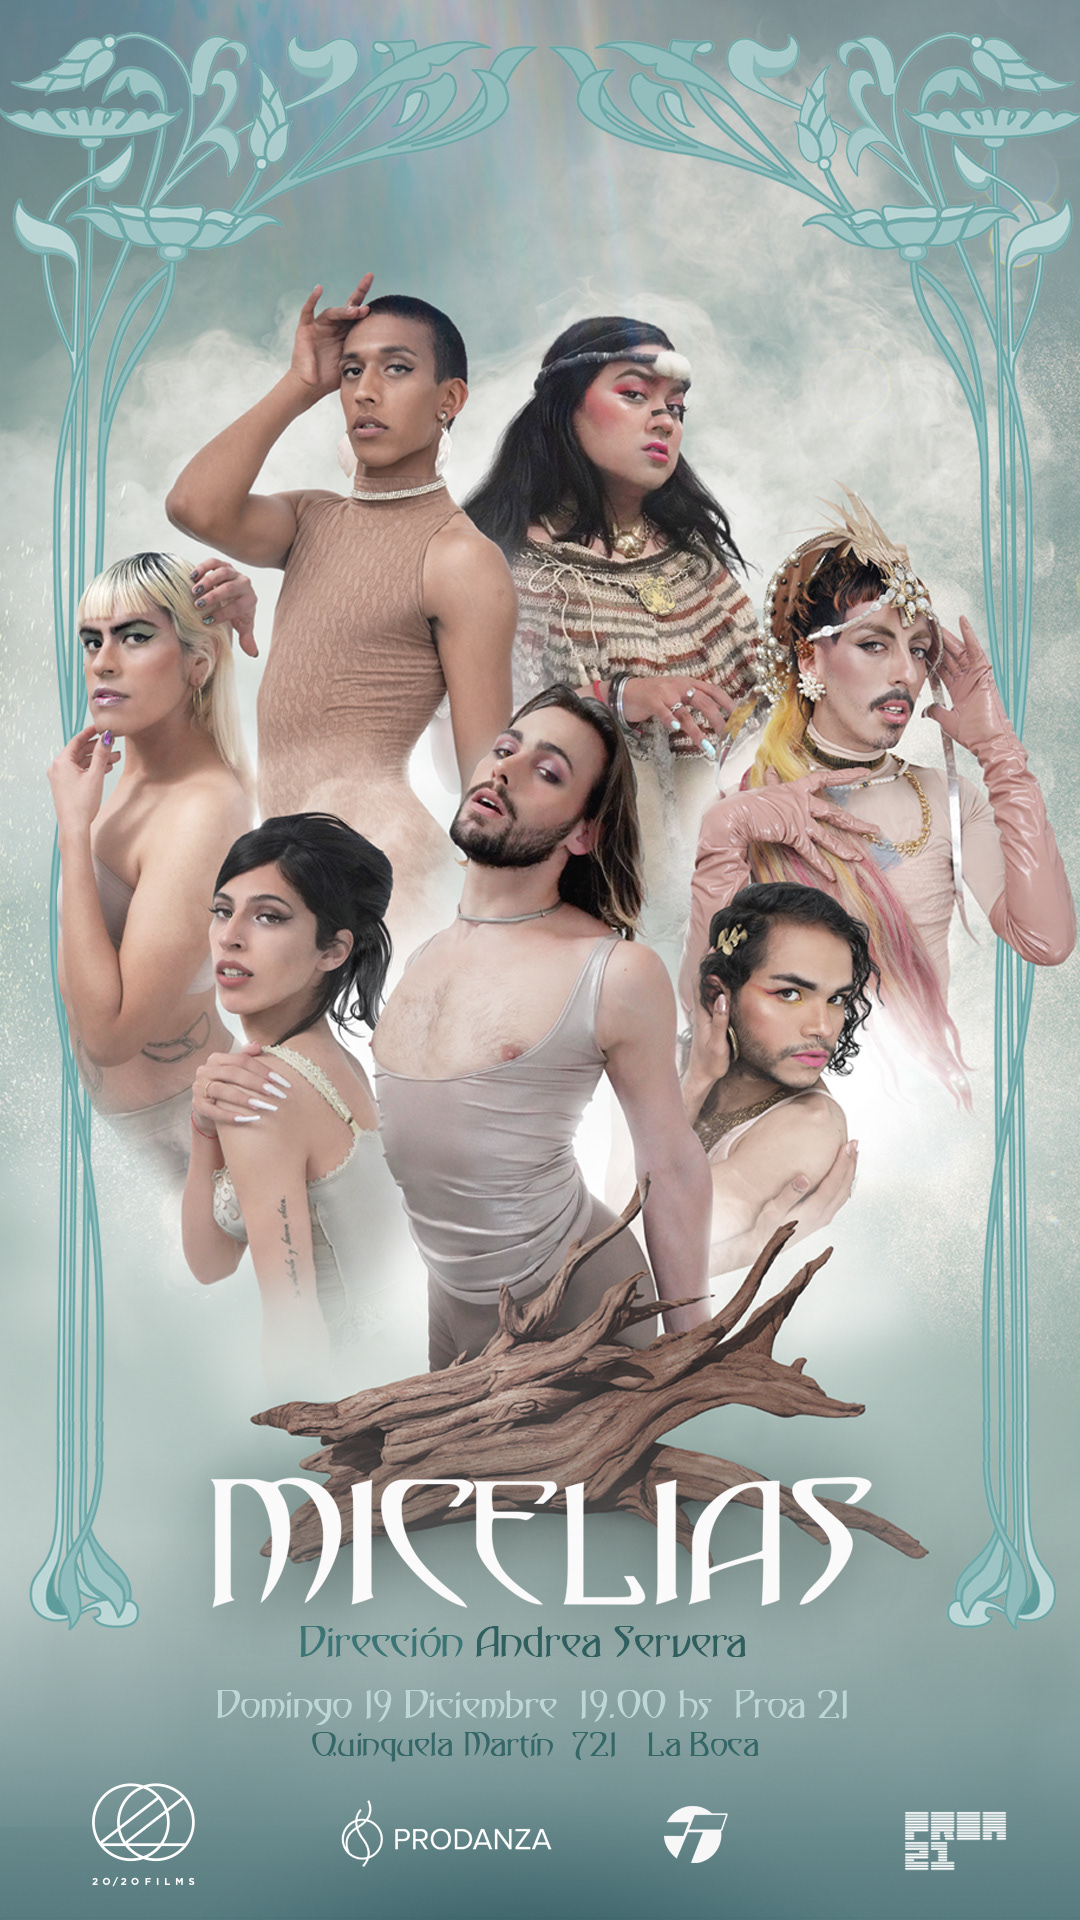 Cooperativa danzateatro Digital Art  Diversity inclusion Inclusive LGBT Performance queer trans gender